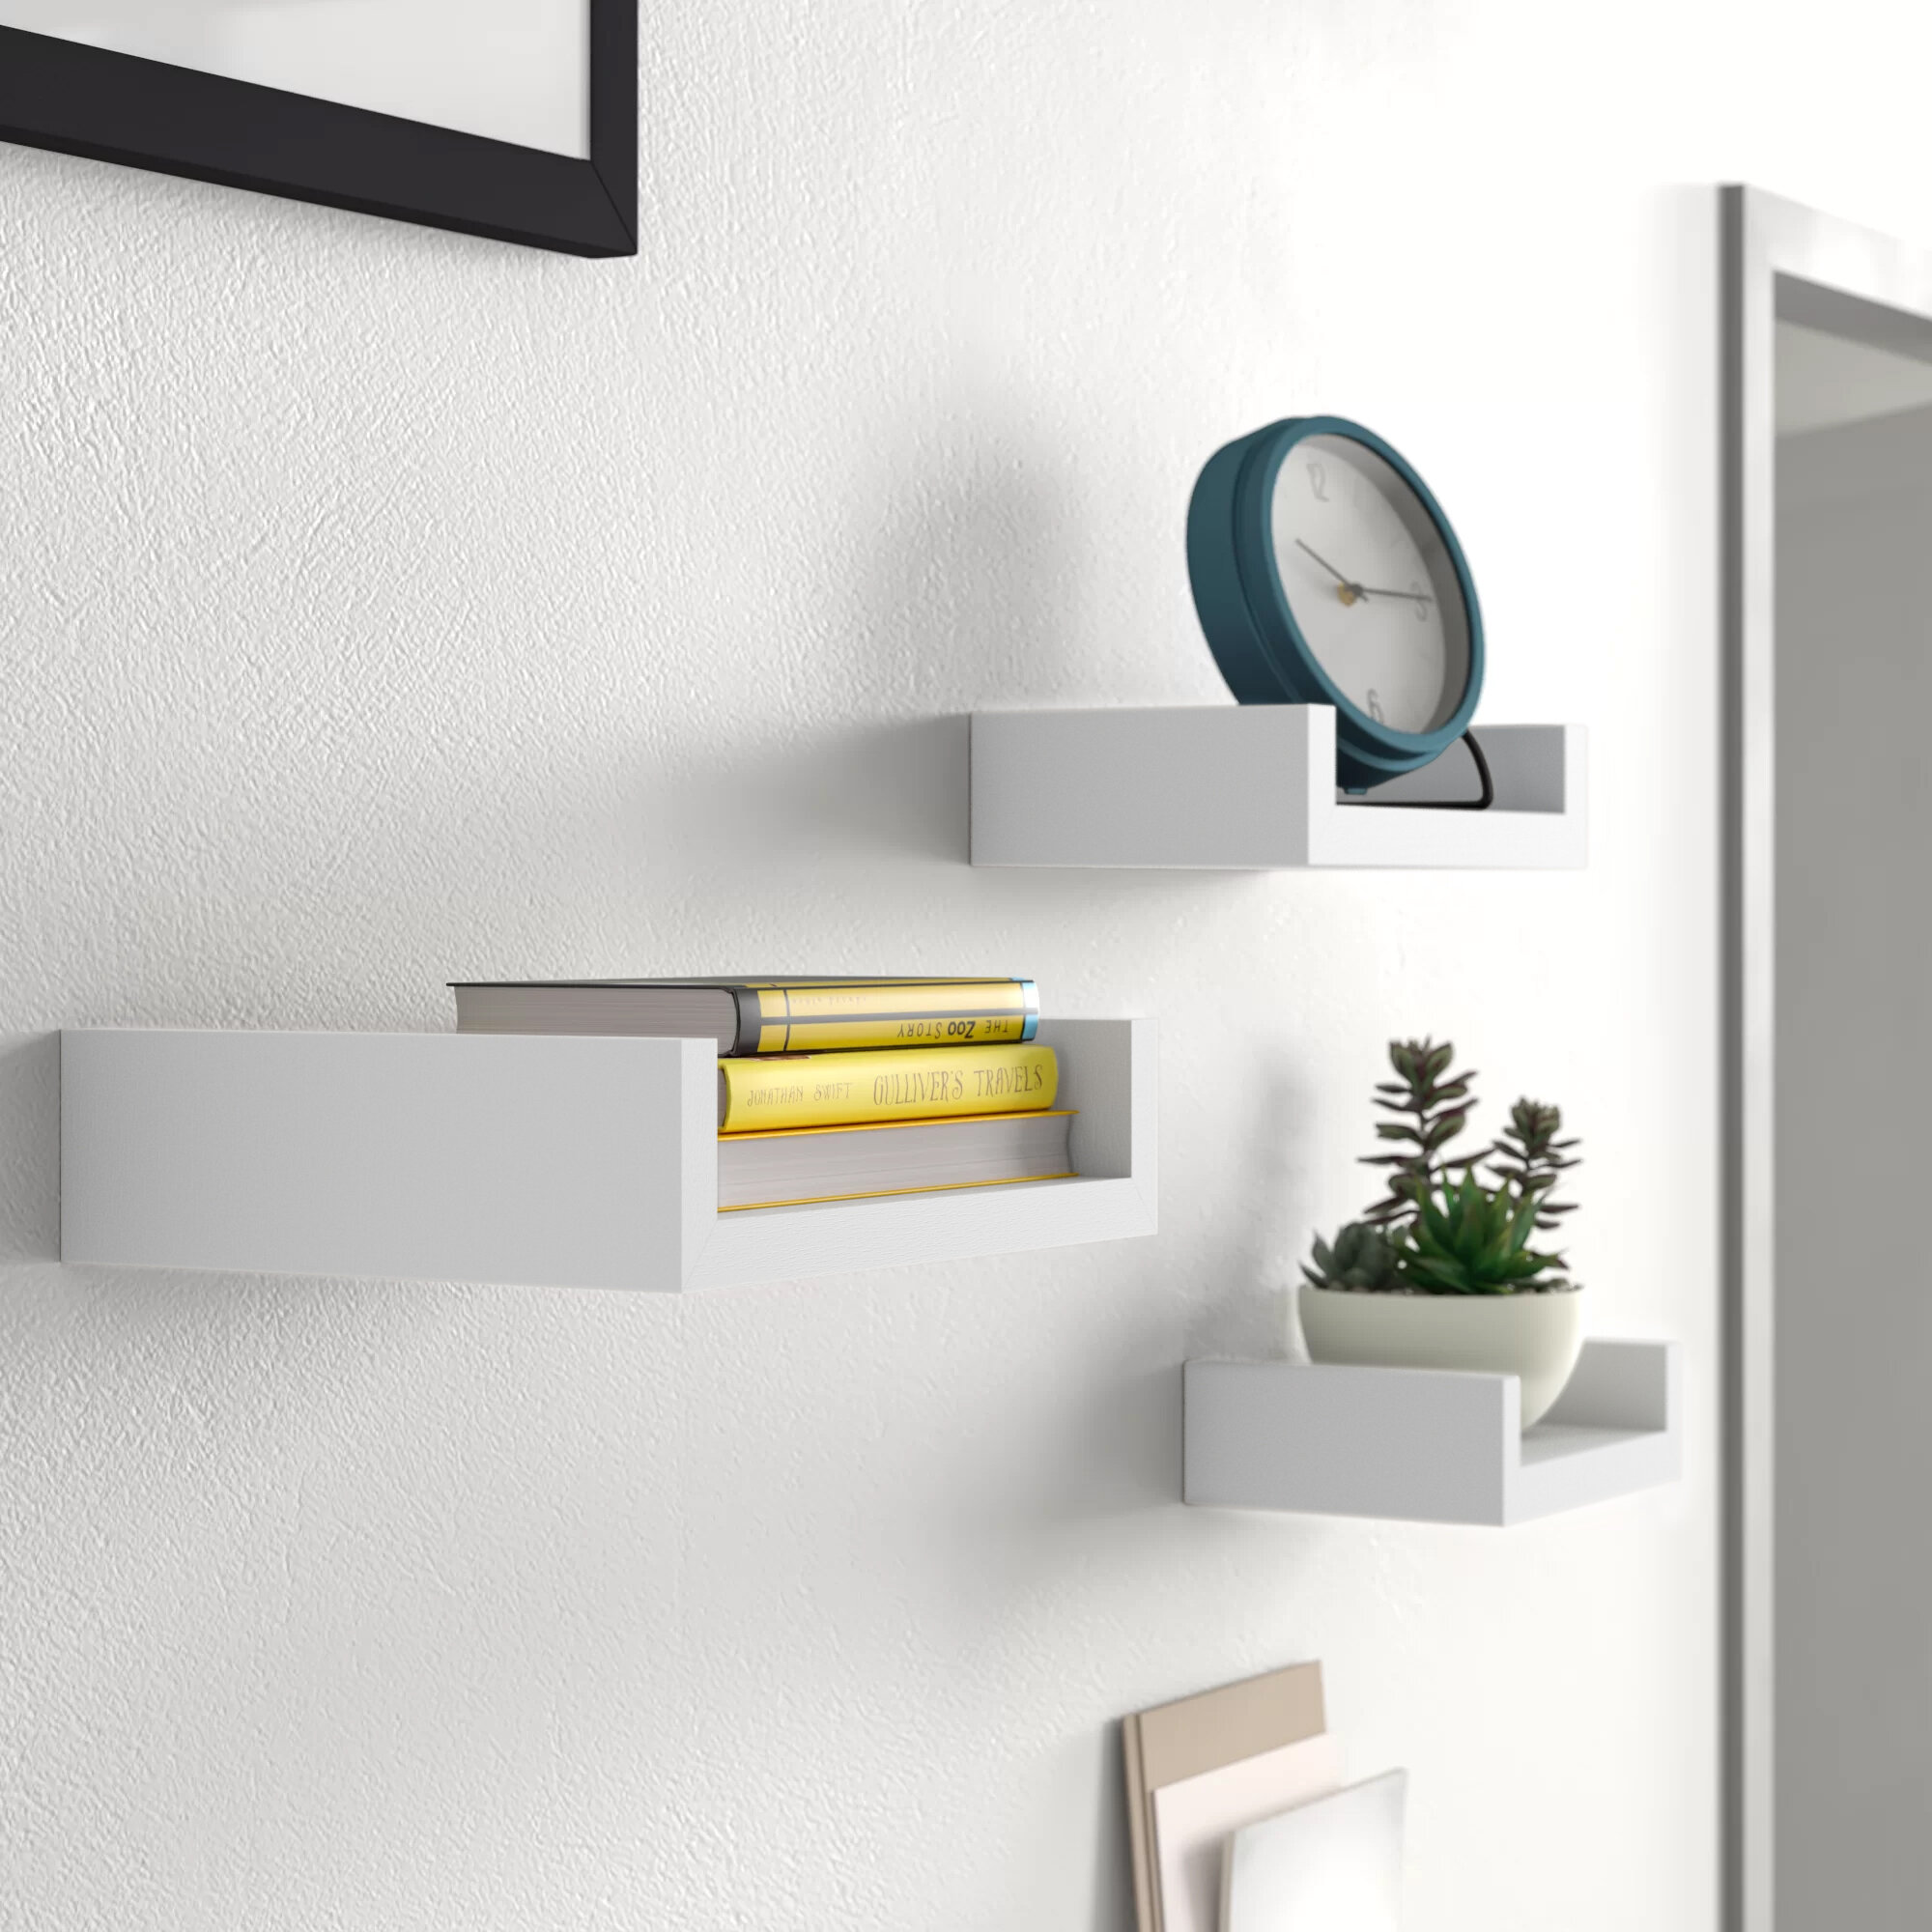 Details about   Set of 3 Wood Wall Shelf Floating Shelf Bathroom Storage Rack Display Shelves 